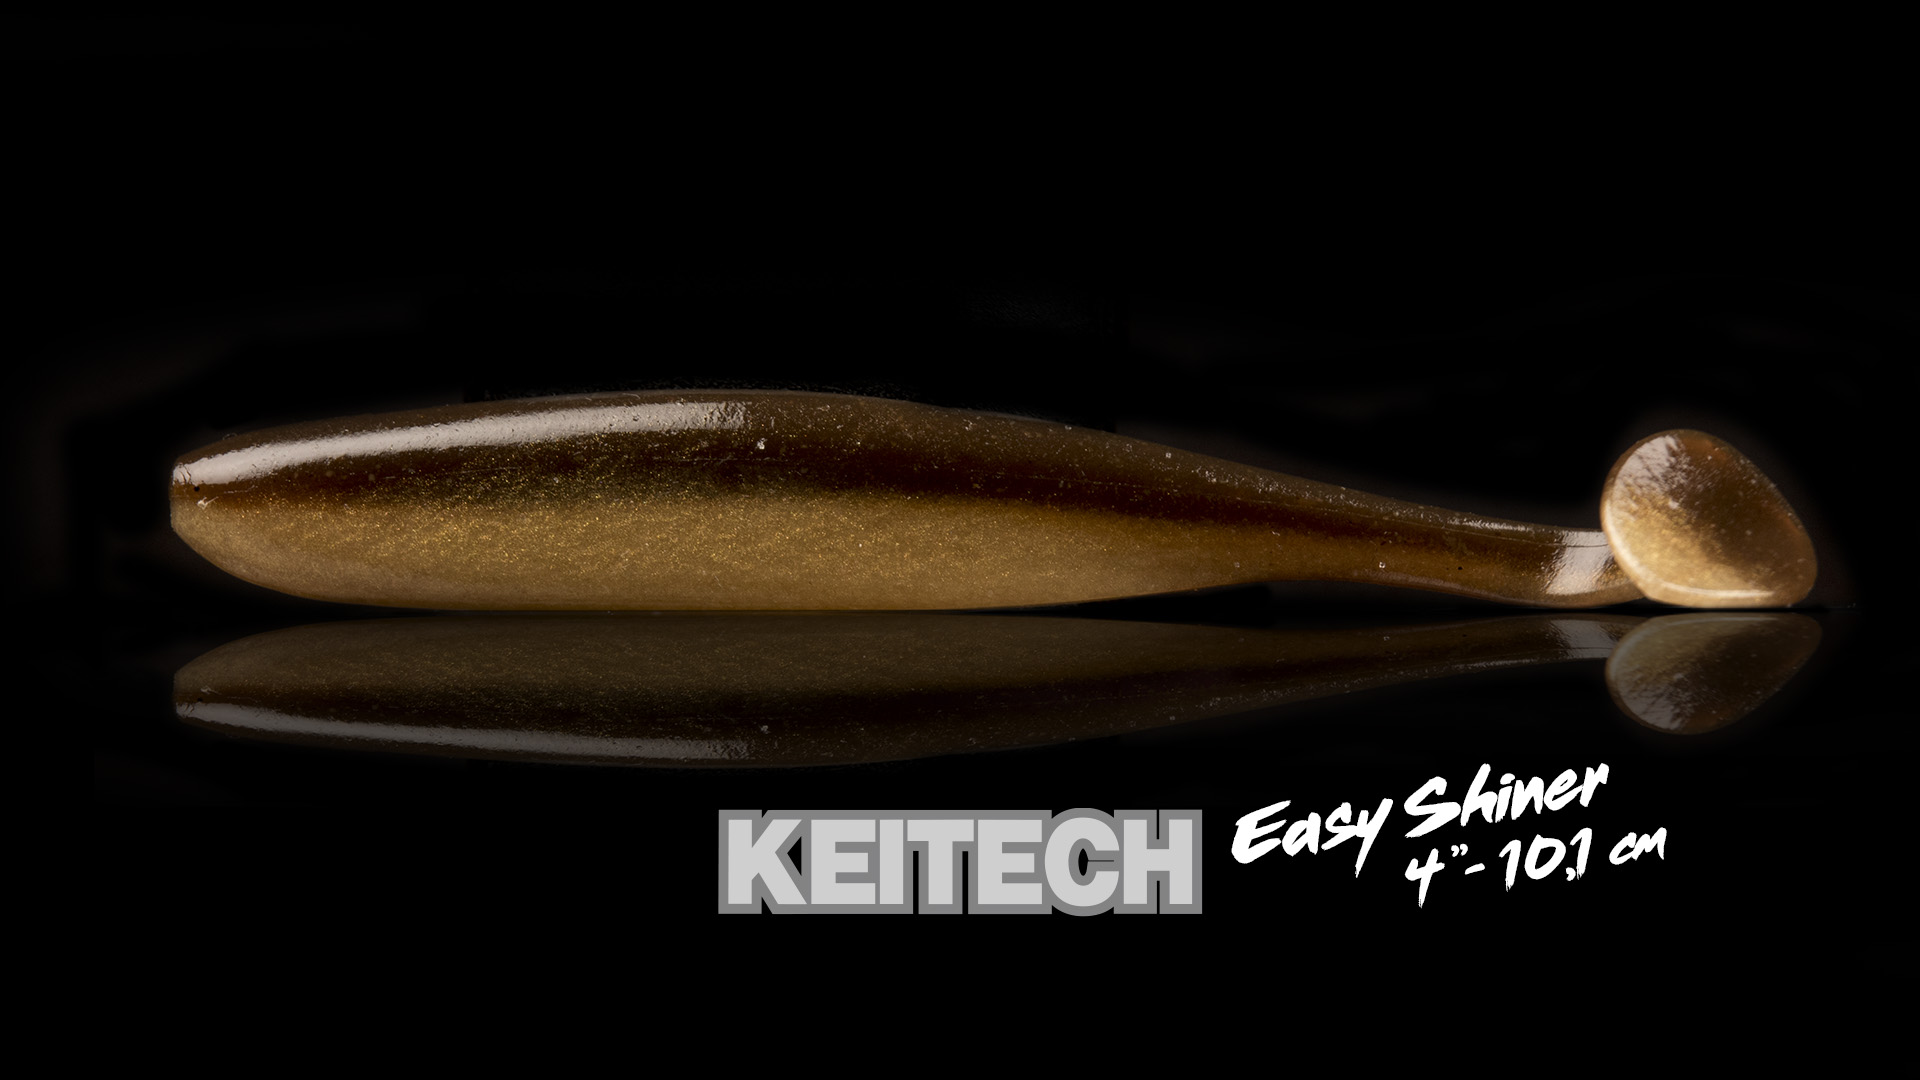 Keitech-Easy-Shiner-40-101-cm